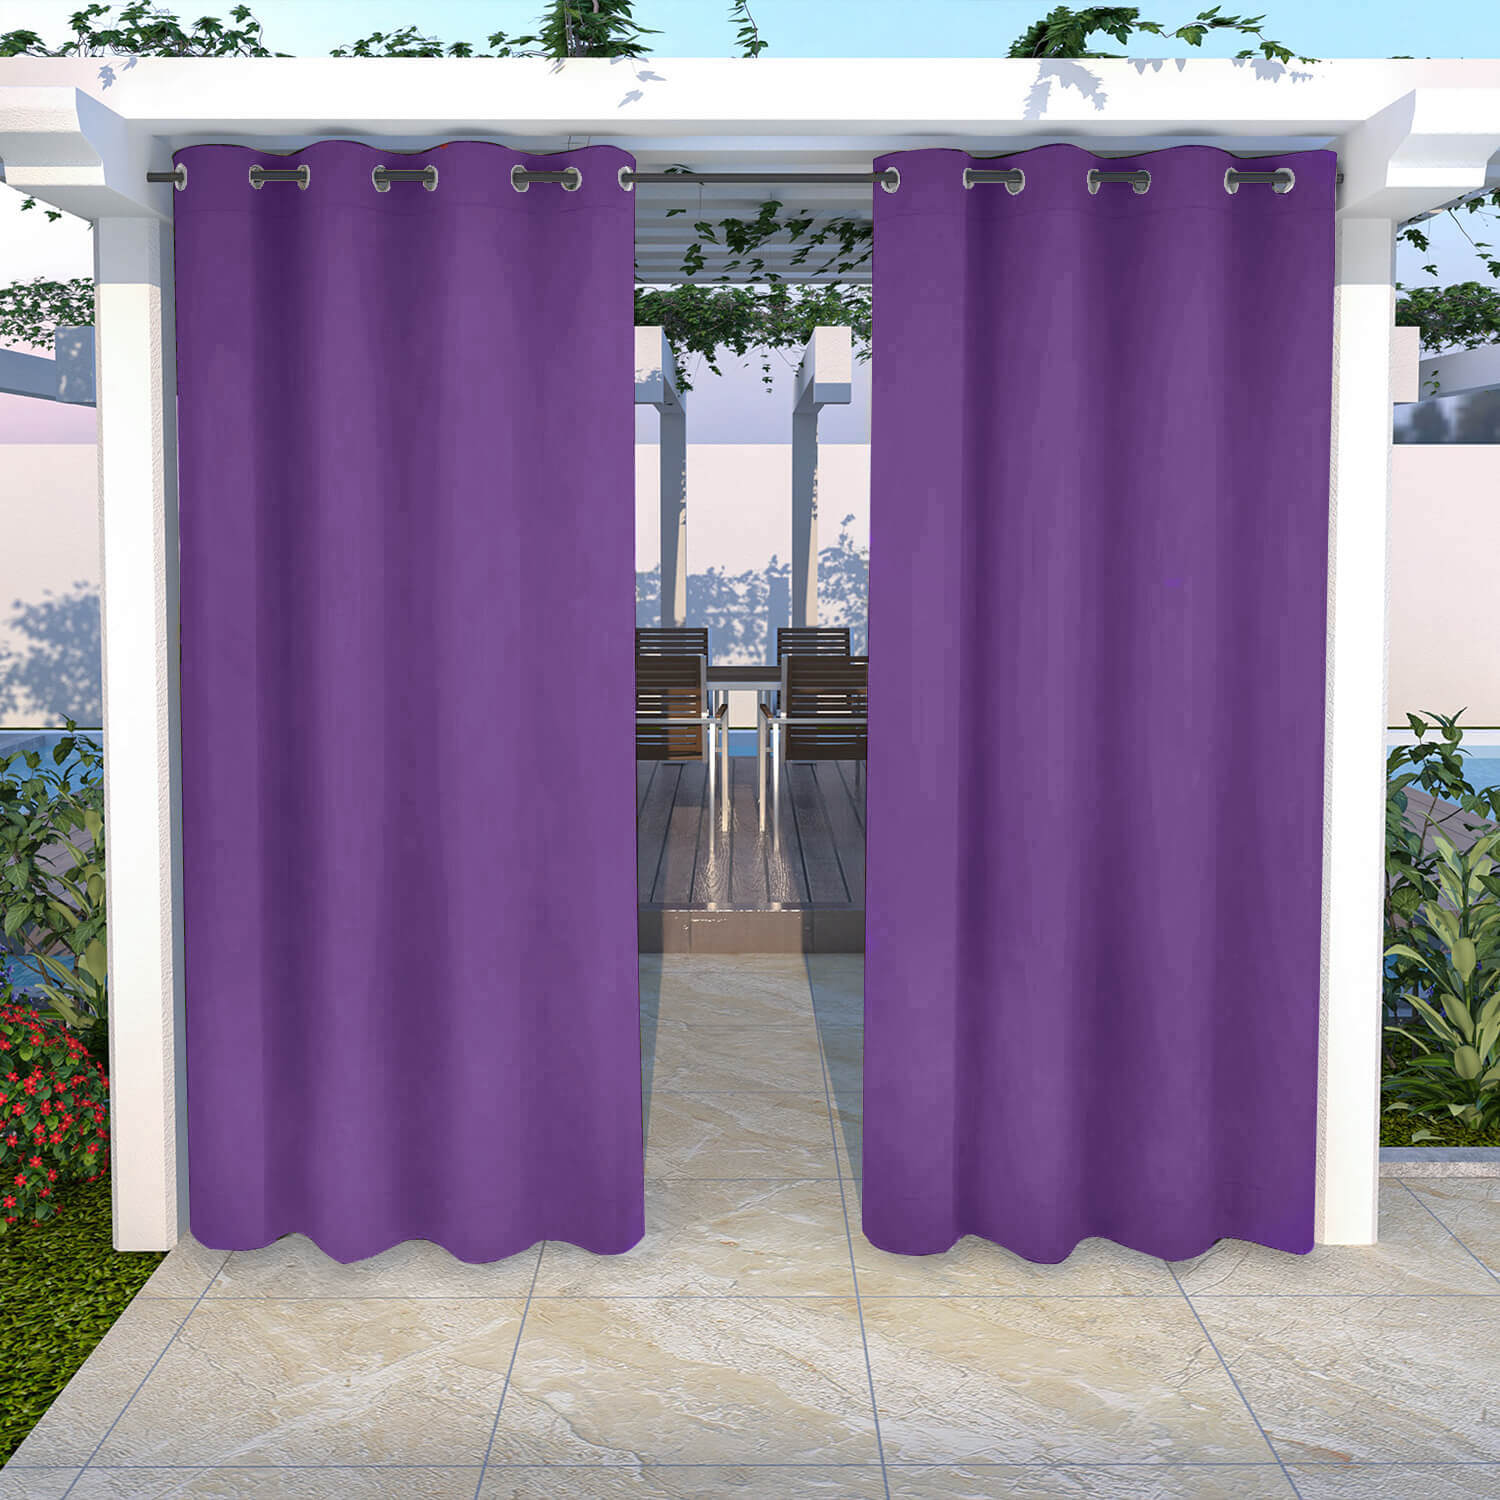 Snowcity Outdoor Curtains Waterproof Grommet Top 1 Panel - Violet